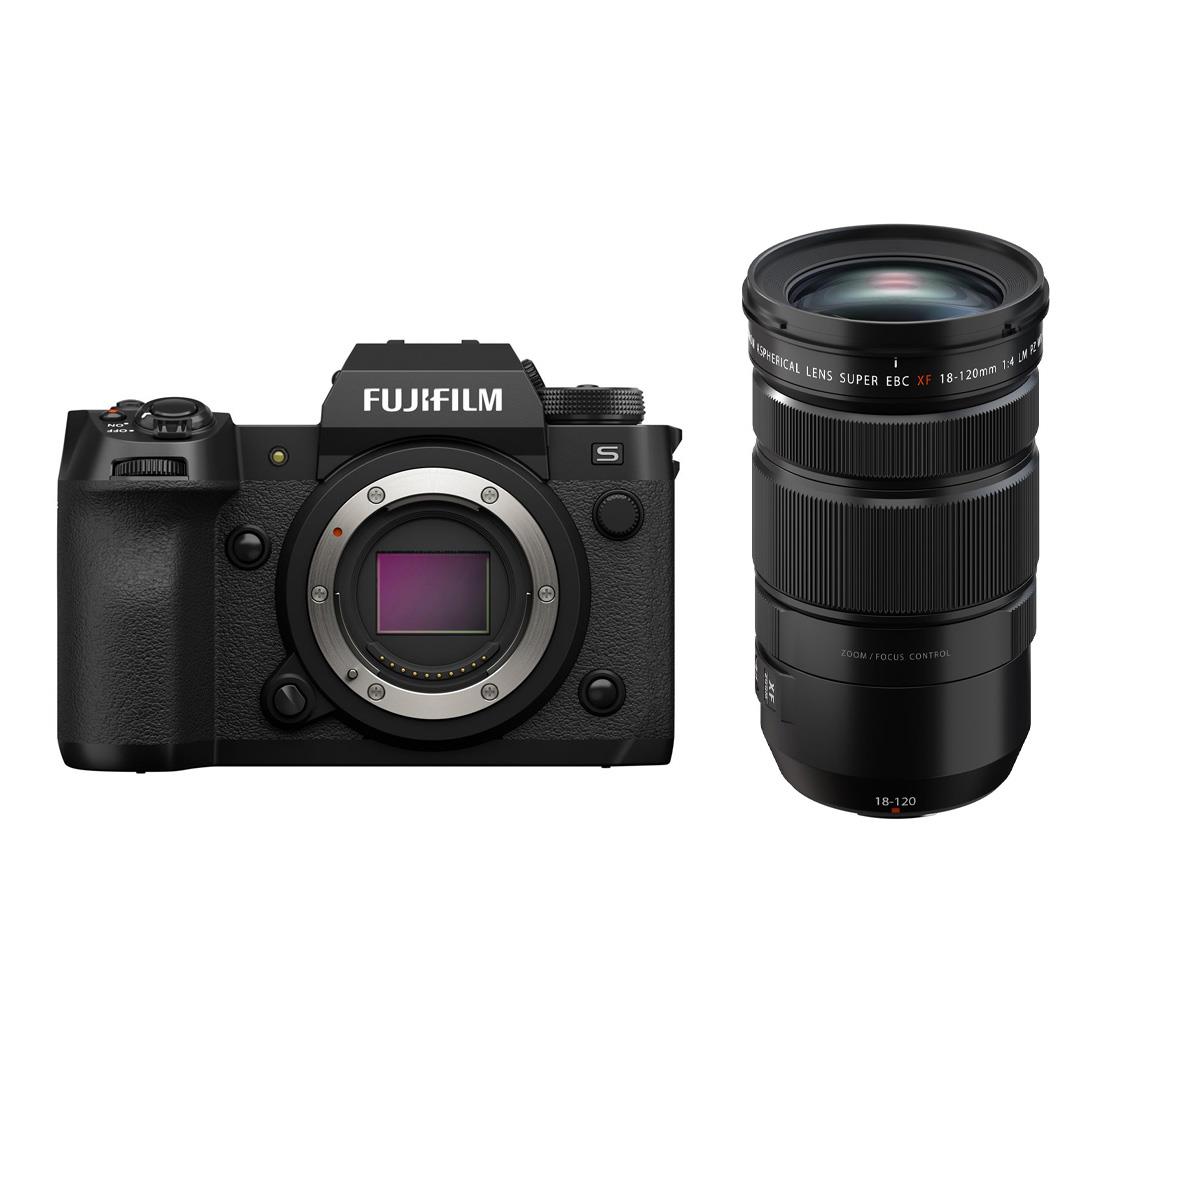 Image of Fujifilm X-H2S Mirrorless Digital Camera with XF 18-120mm f/4 LM PZ WR Lens